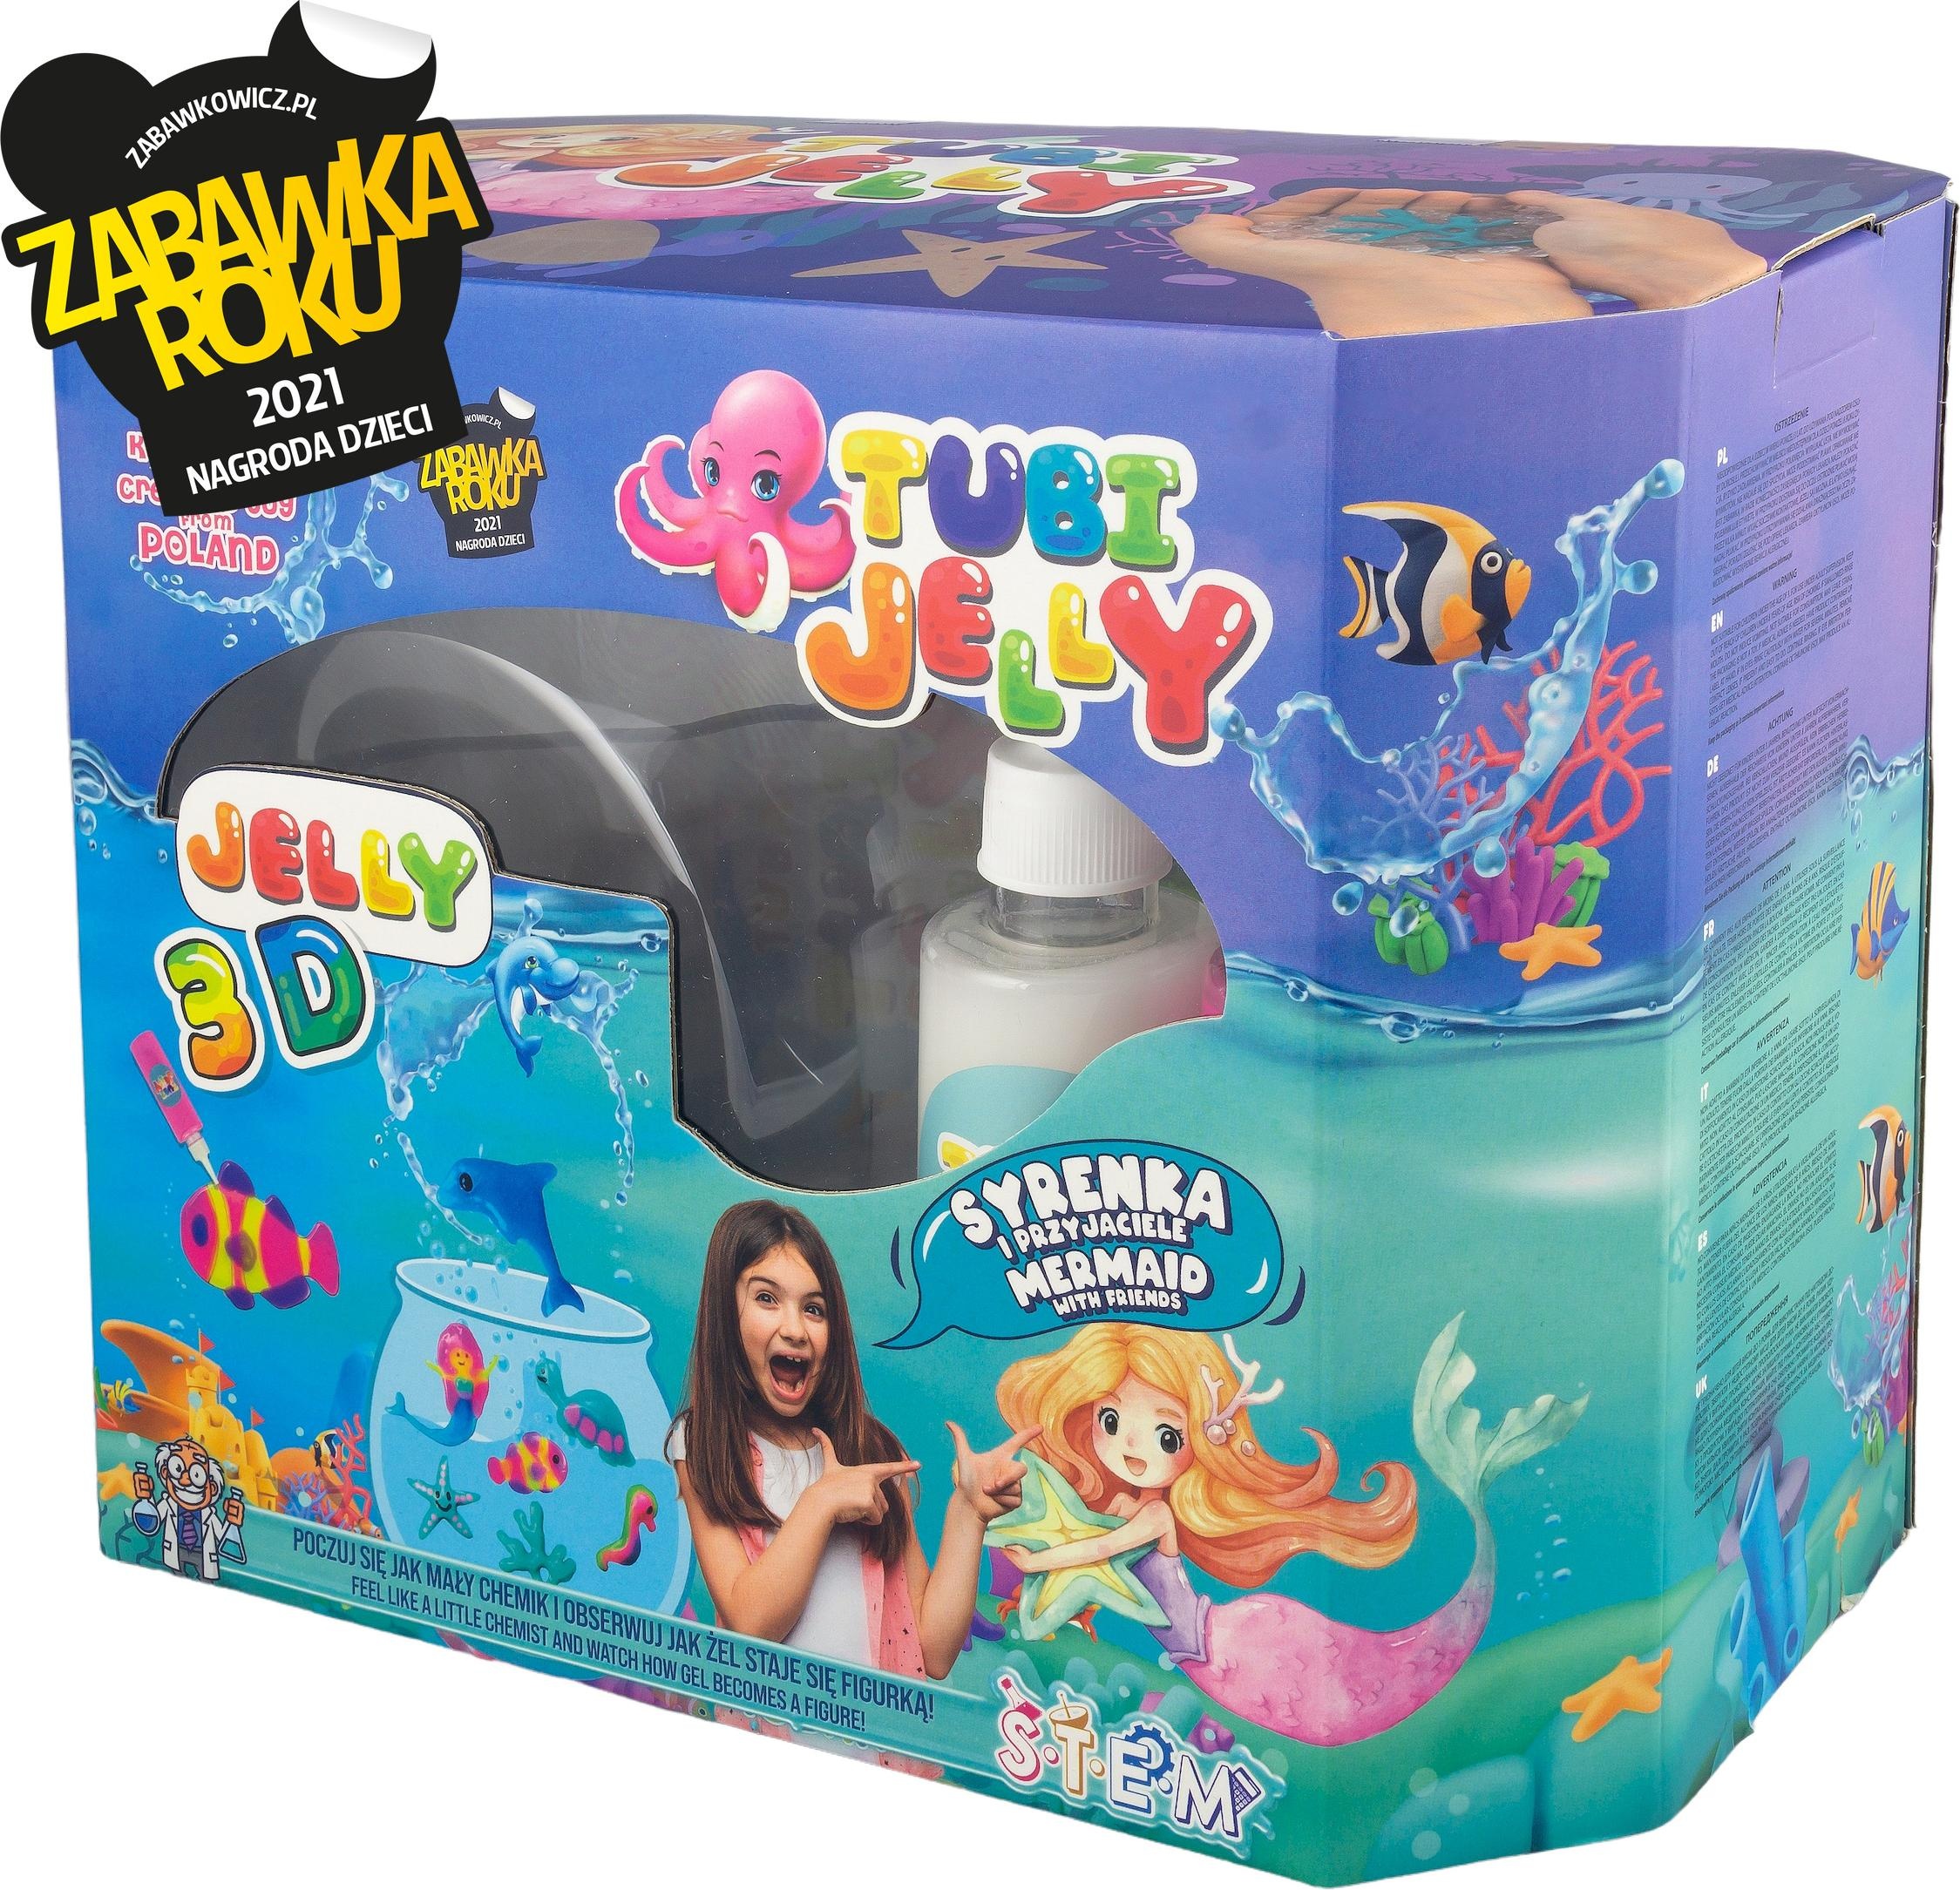 Tuban 8 Farben Tubi Jelly Set mit kleinem Aquarium - Meerjungfrau